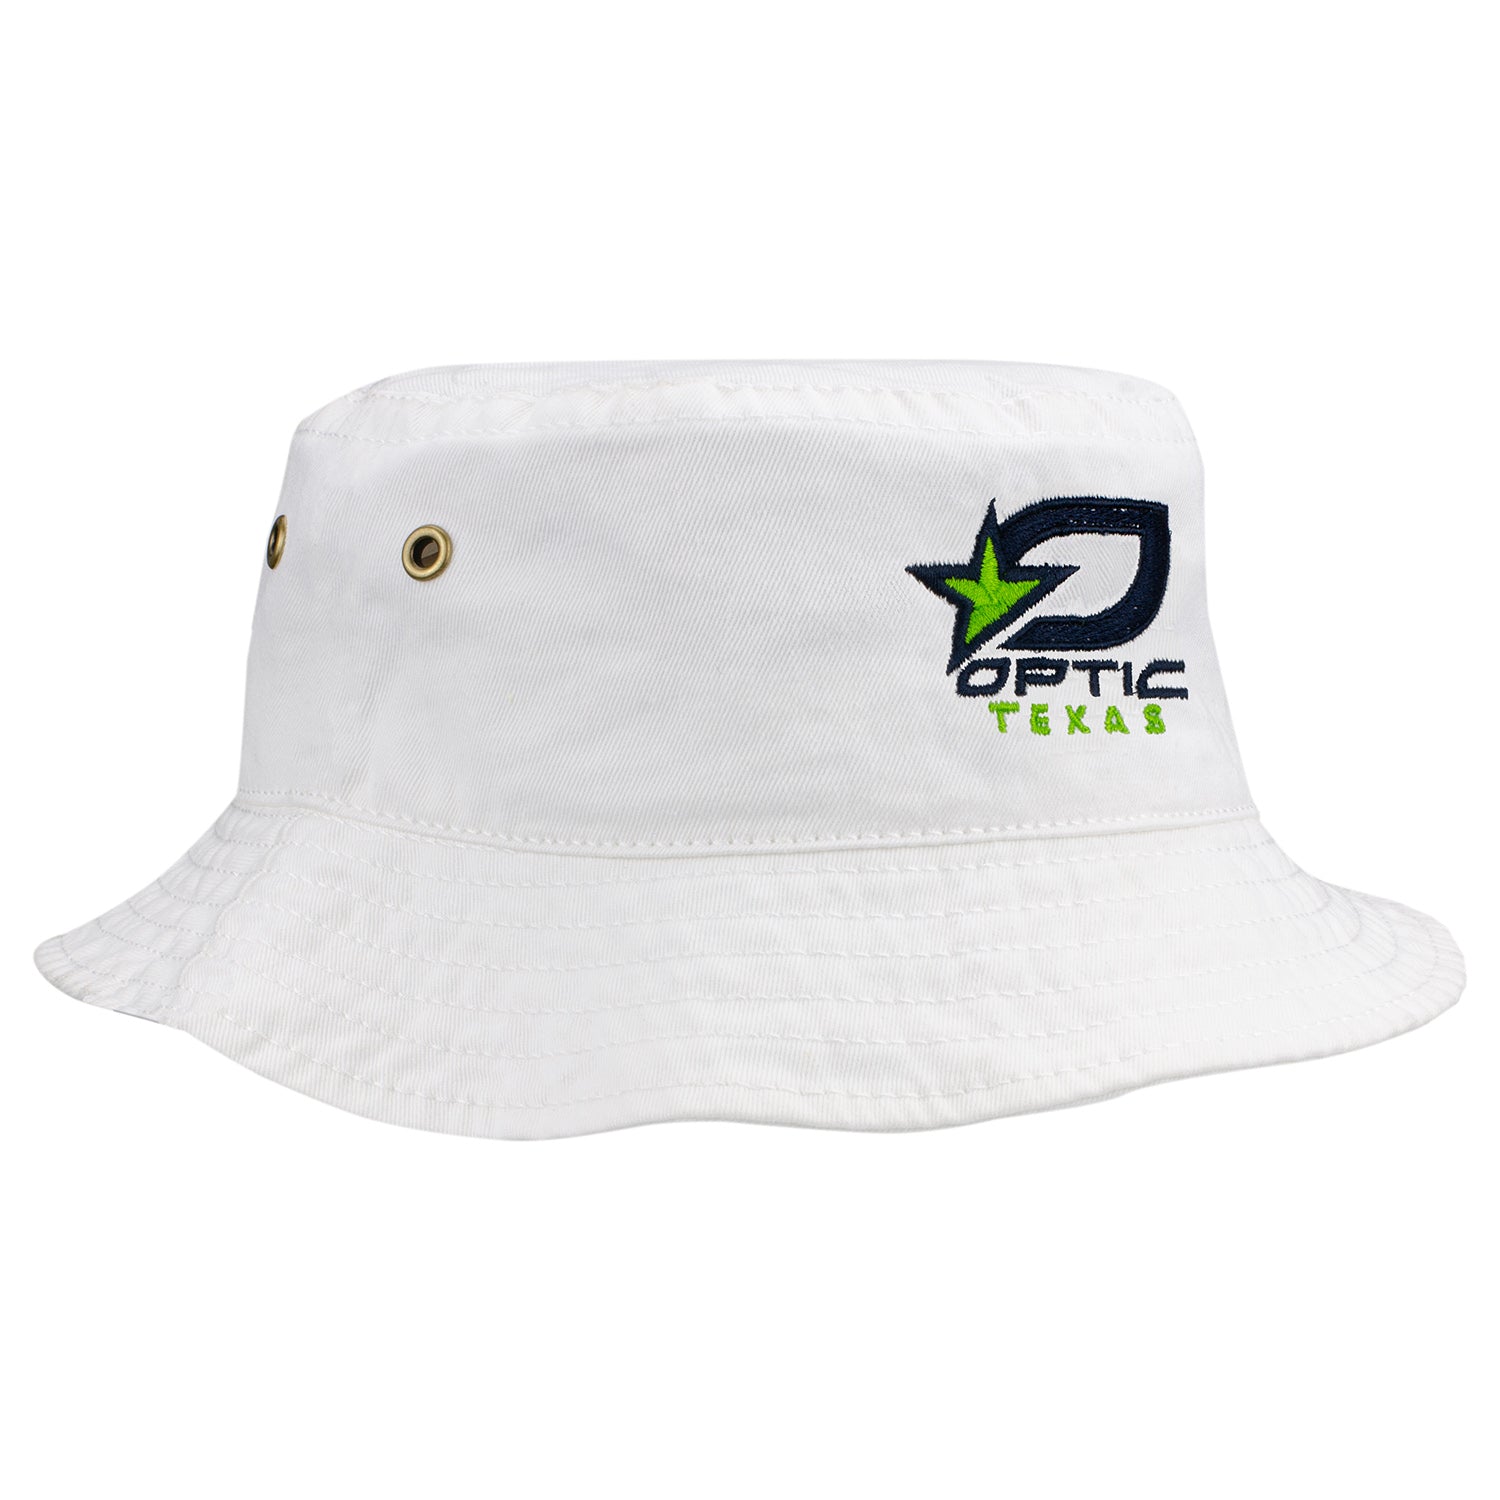 Optic Texas White Bucket Hat / S/M